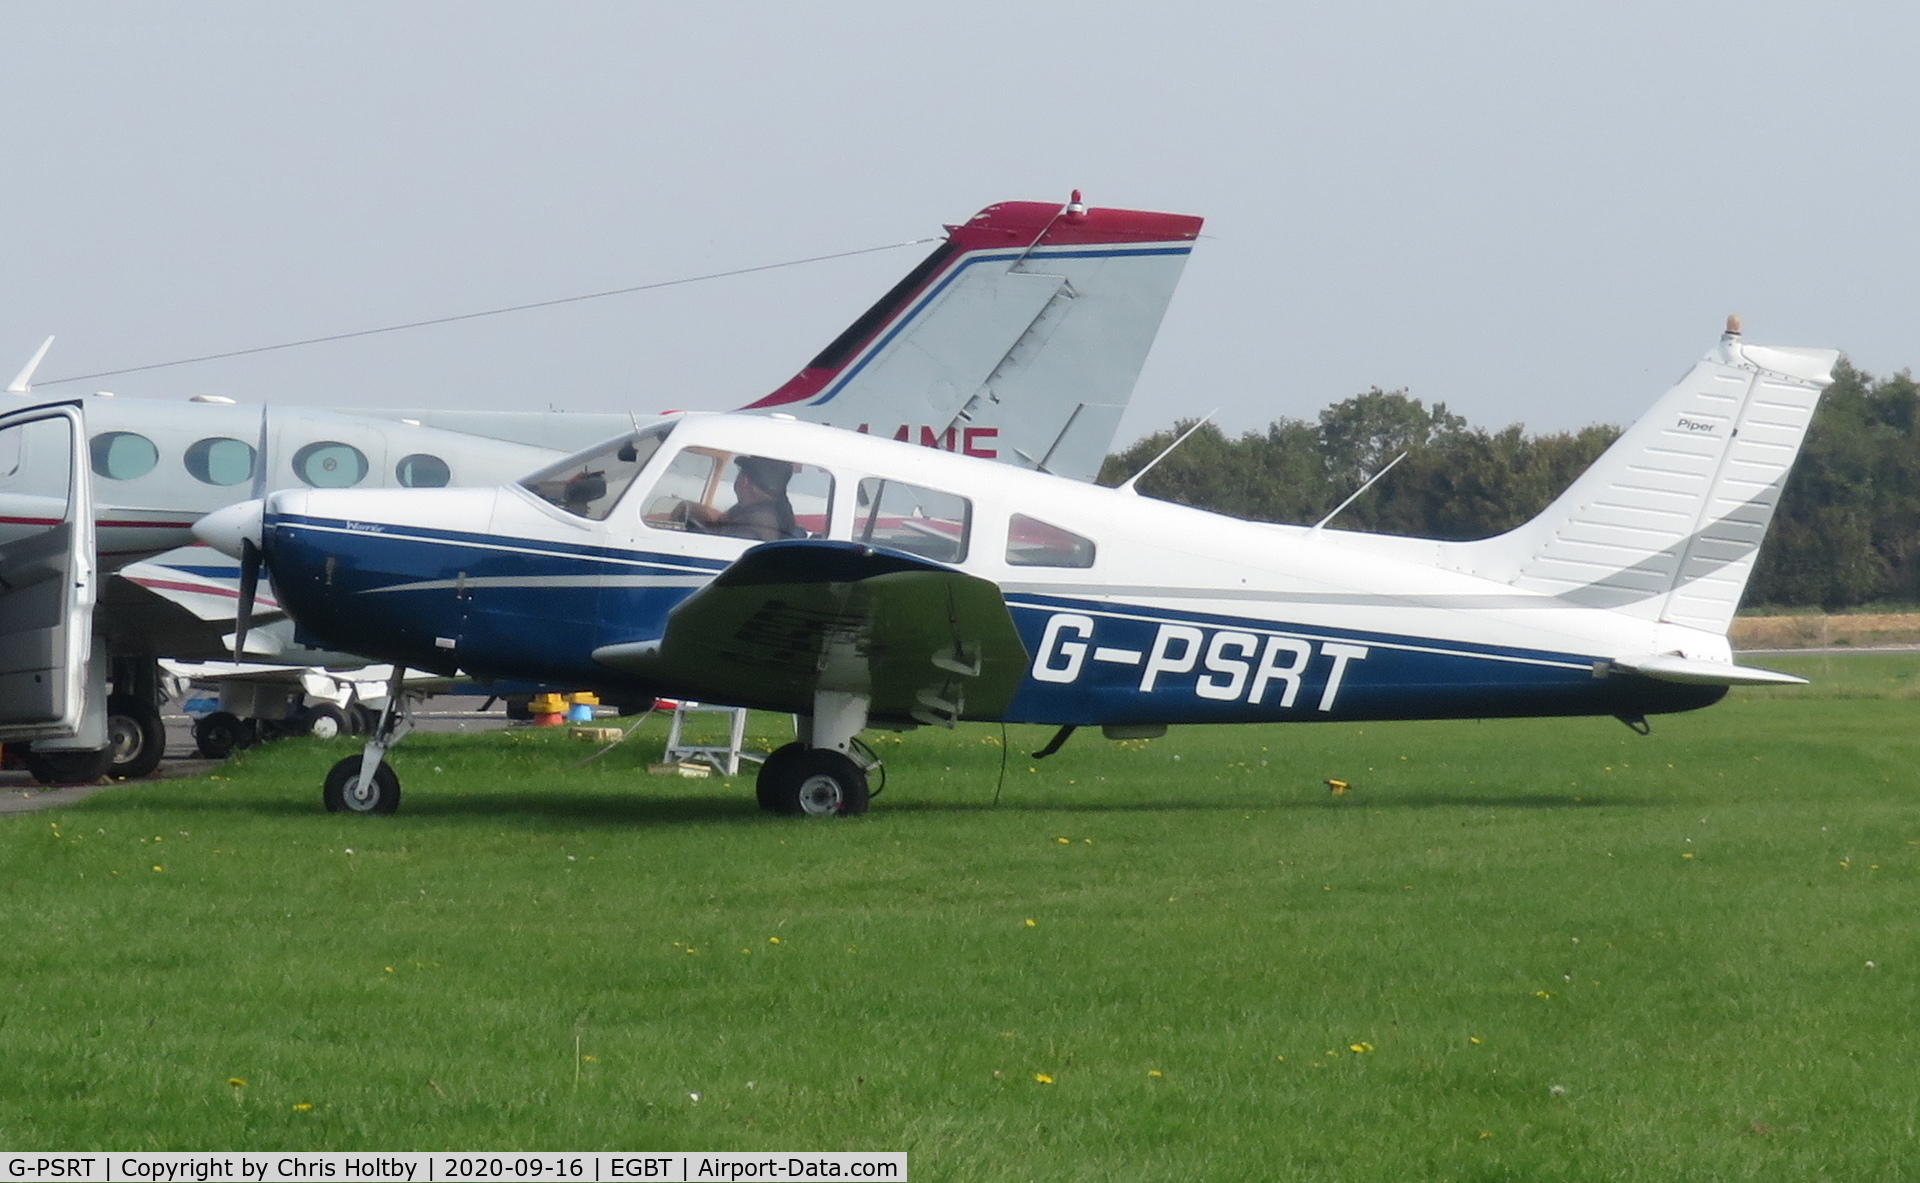 G-PSRT, 1976 Piper PA-28-151 Cherokee Warrior C/N 28-7615225, Parked at Turweston Airfield, Bucks.